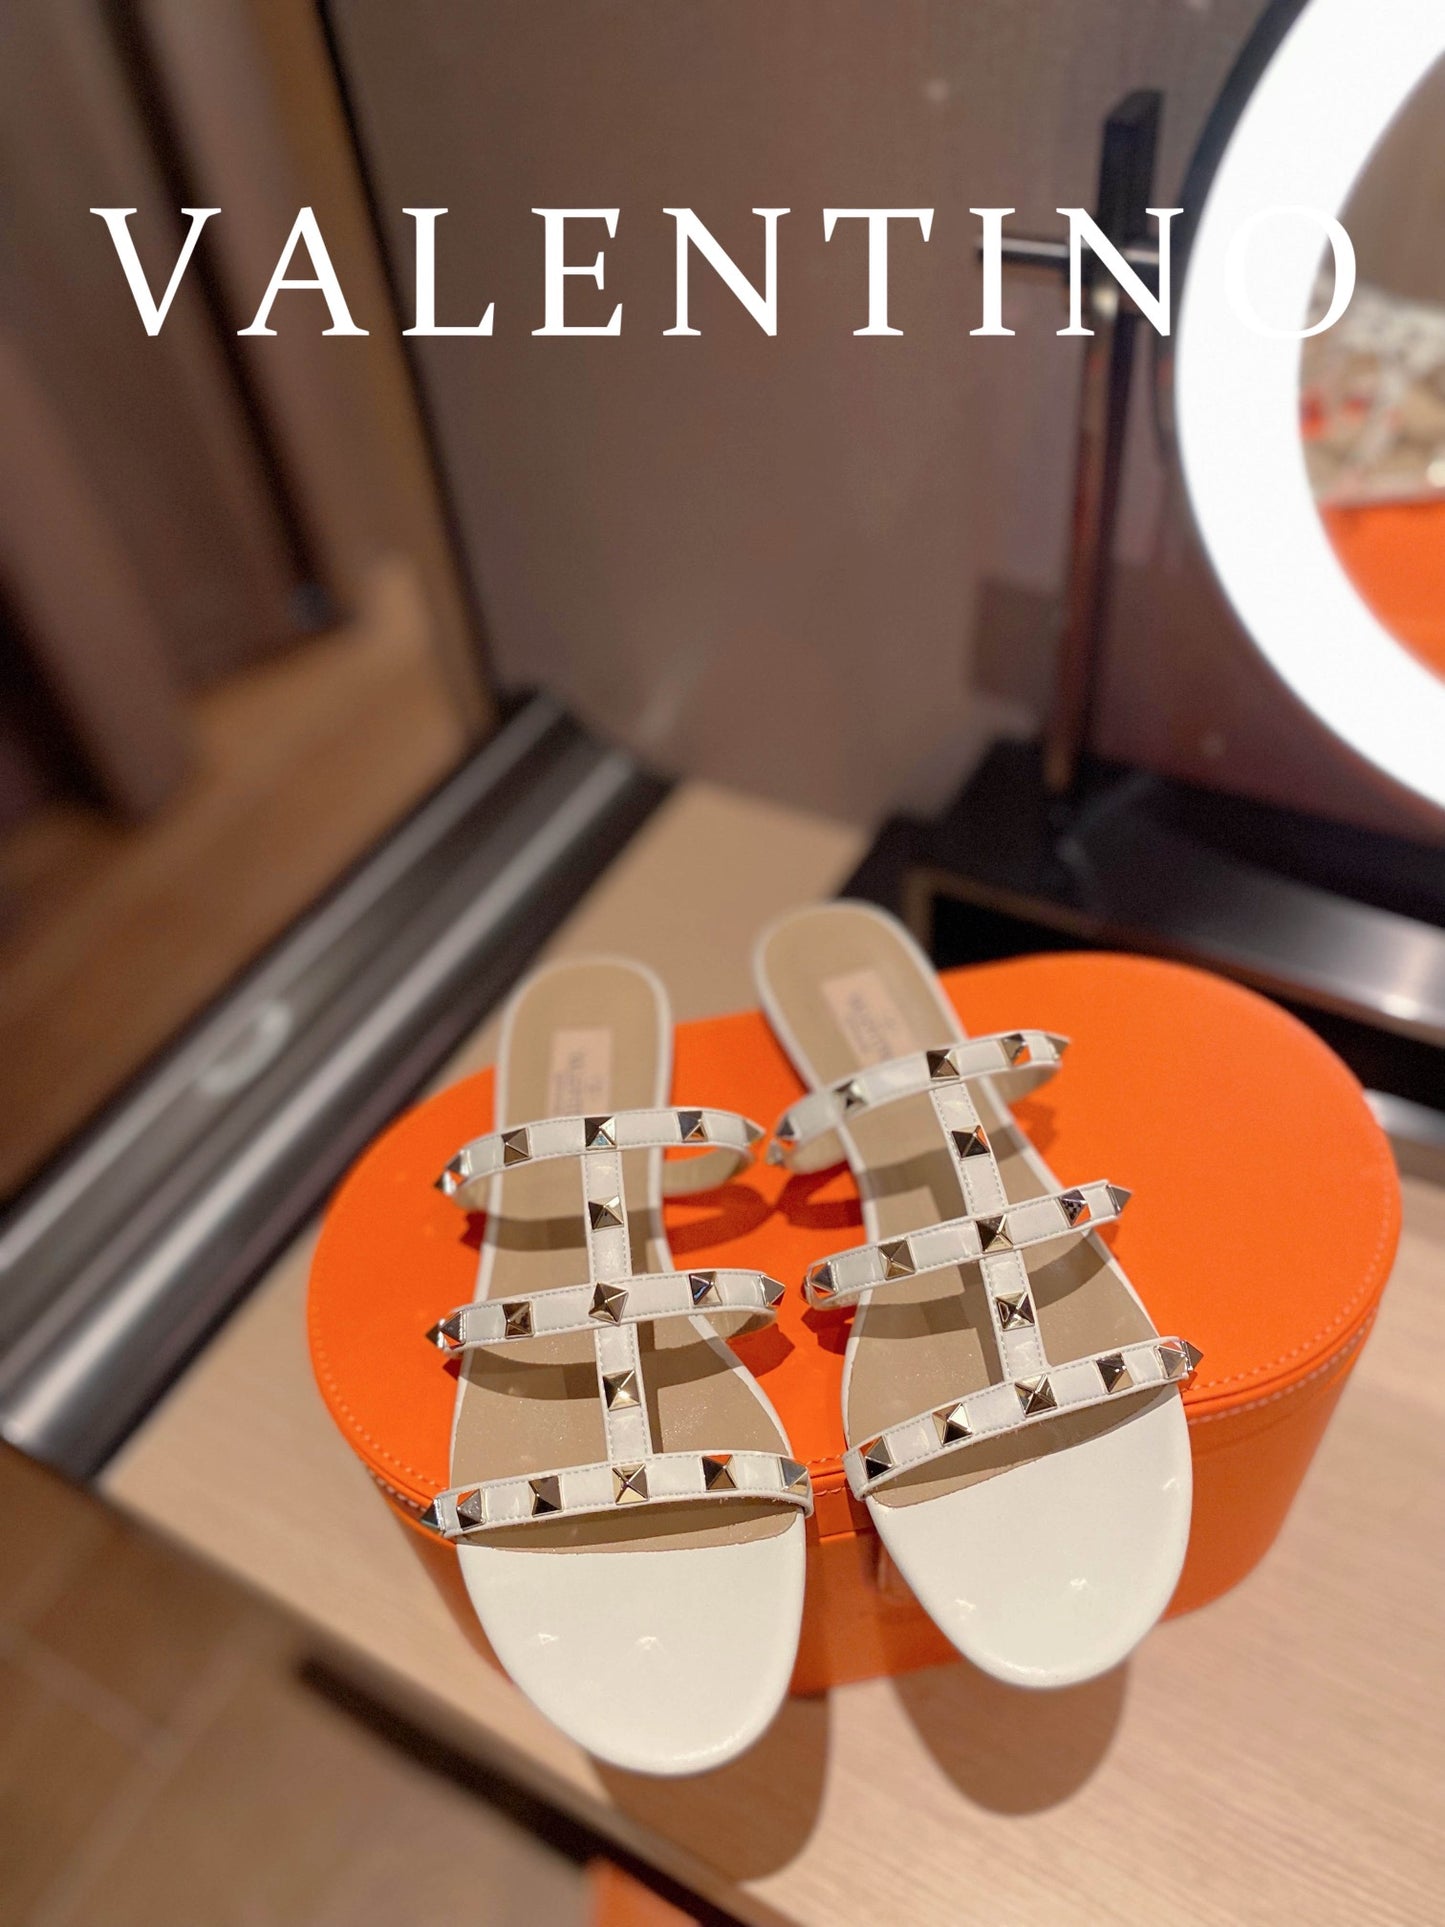 Valentino Flat Sandals